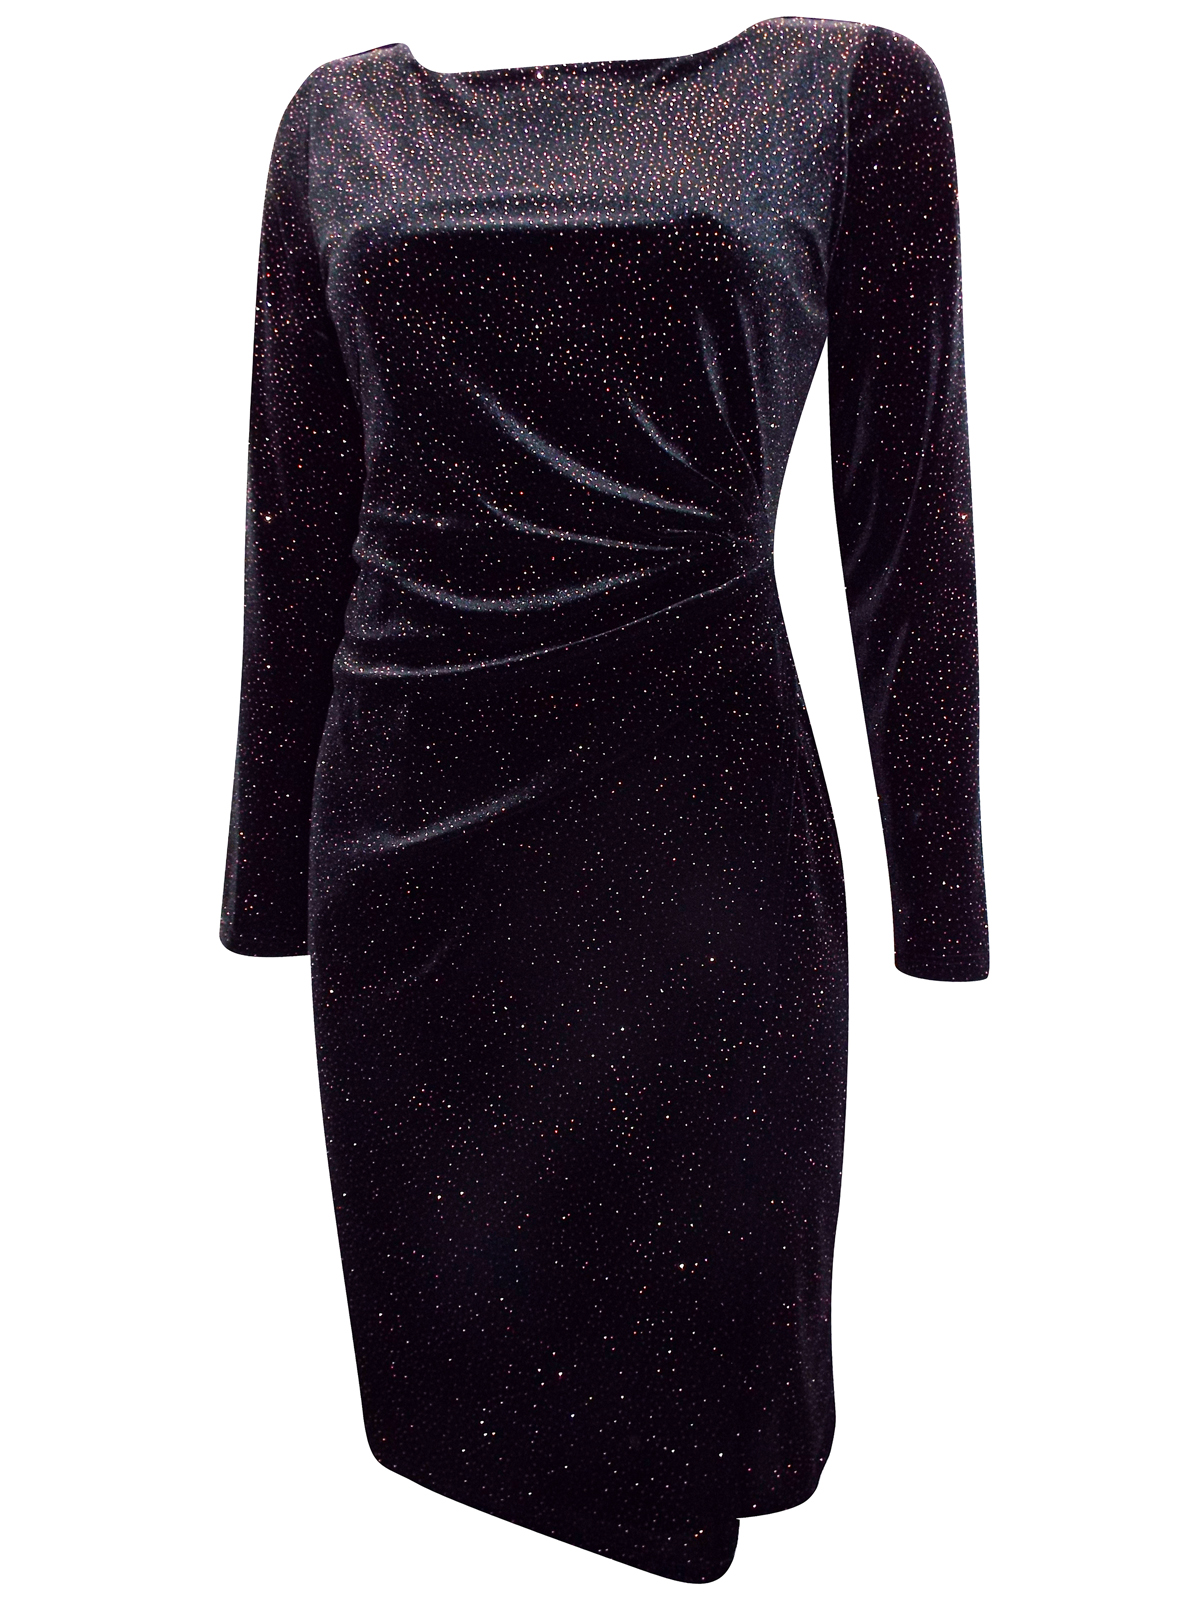 long sleeve black sparkly dress